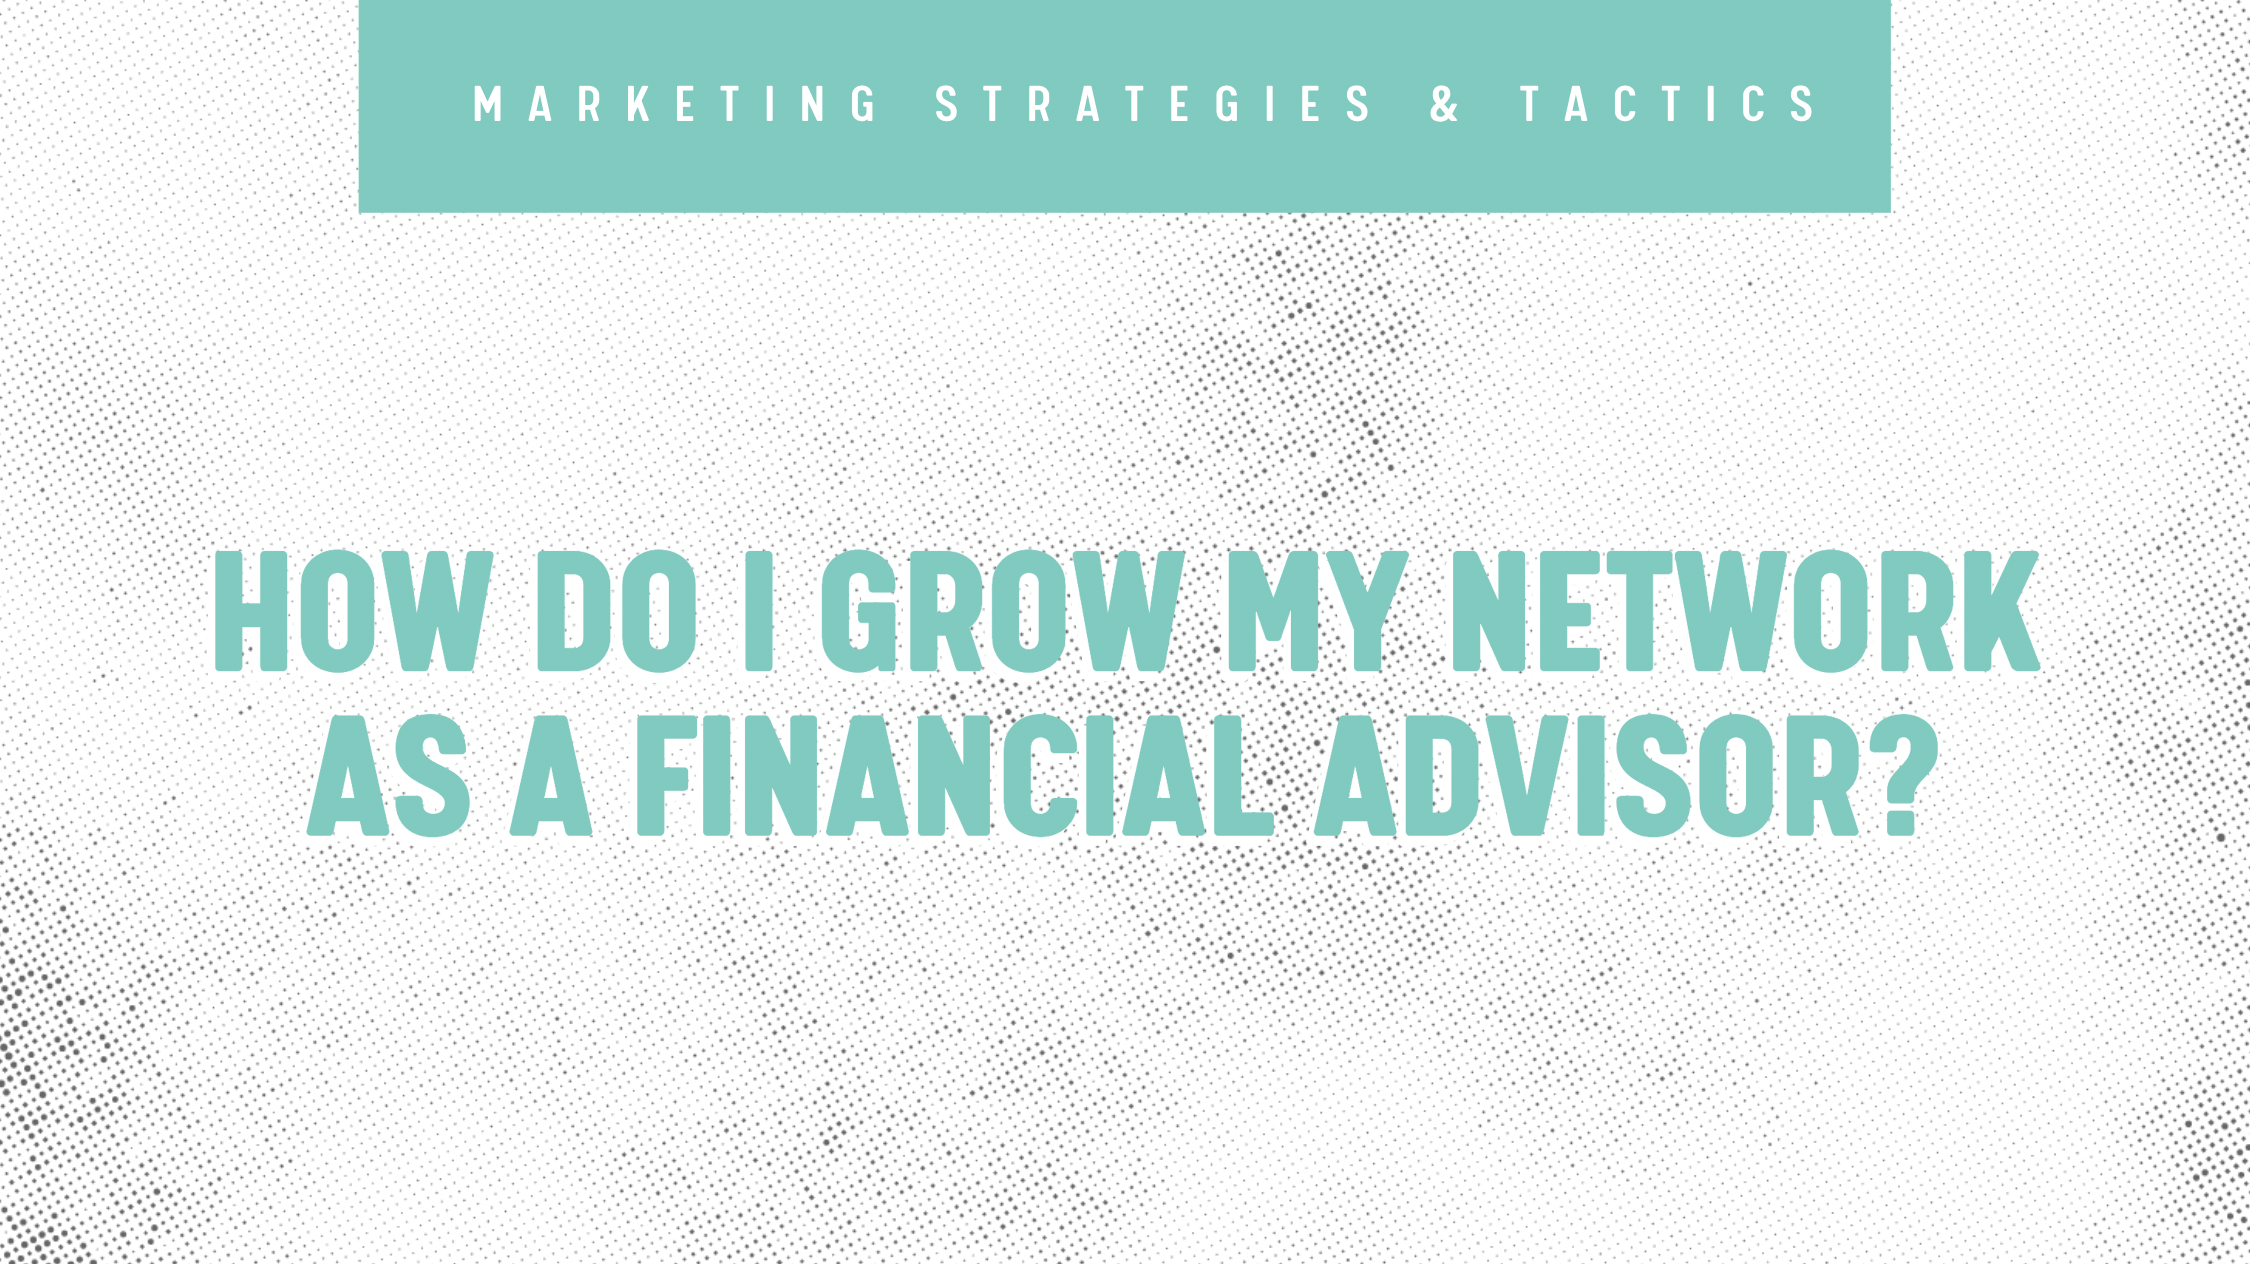 How Do I Grow My Network as a Financial Advisor?